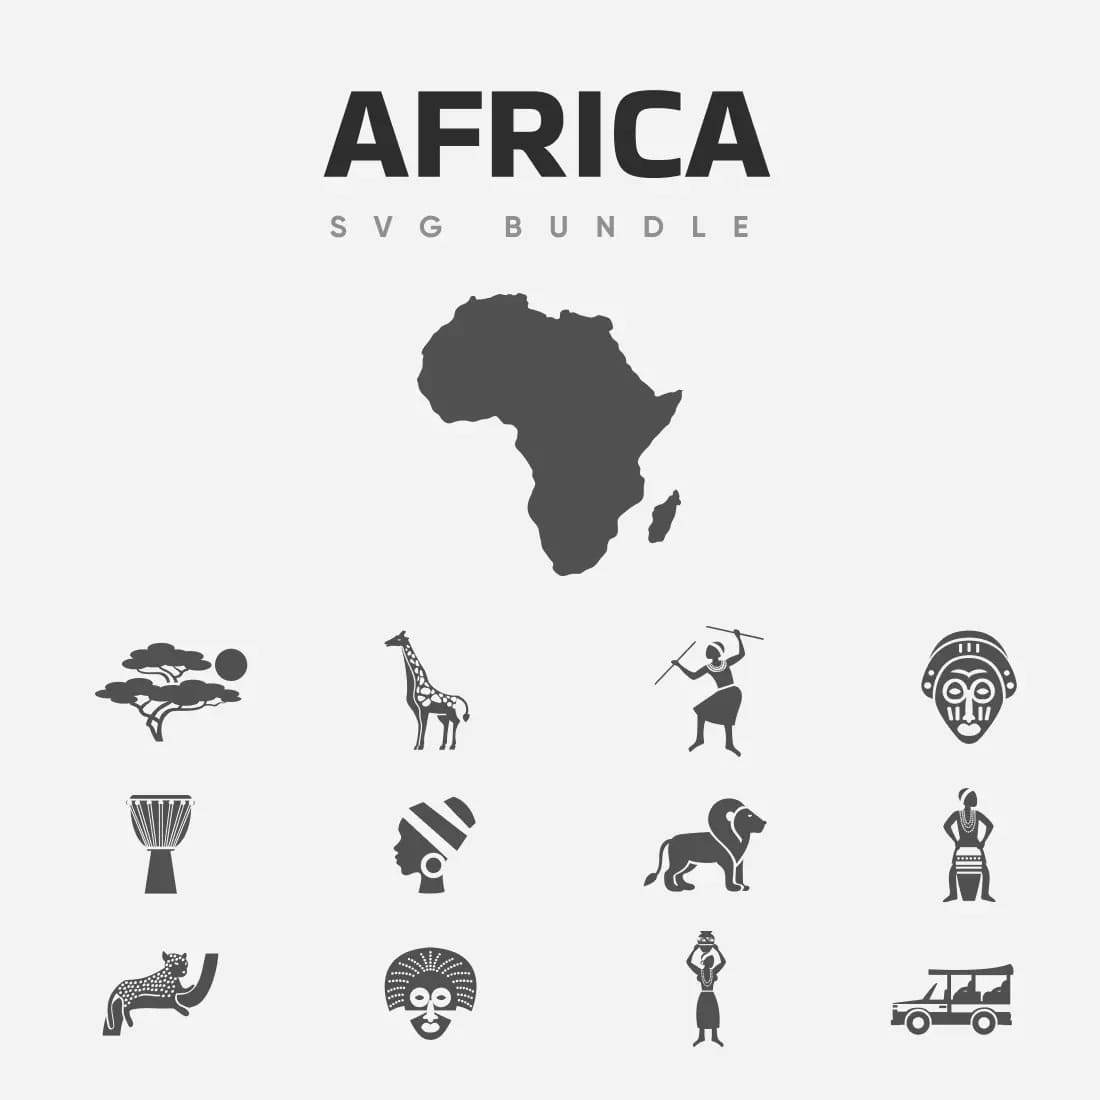 Africa SVG Bundle Preview.